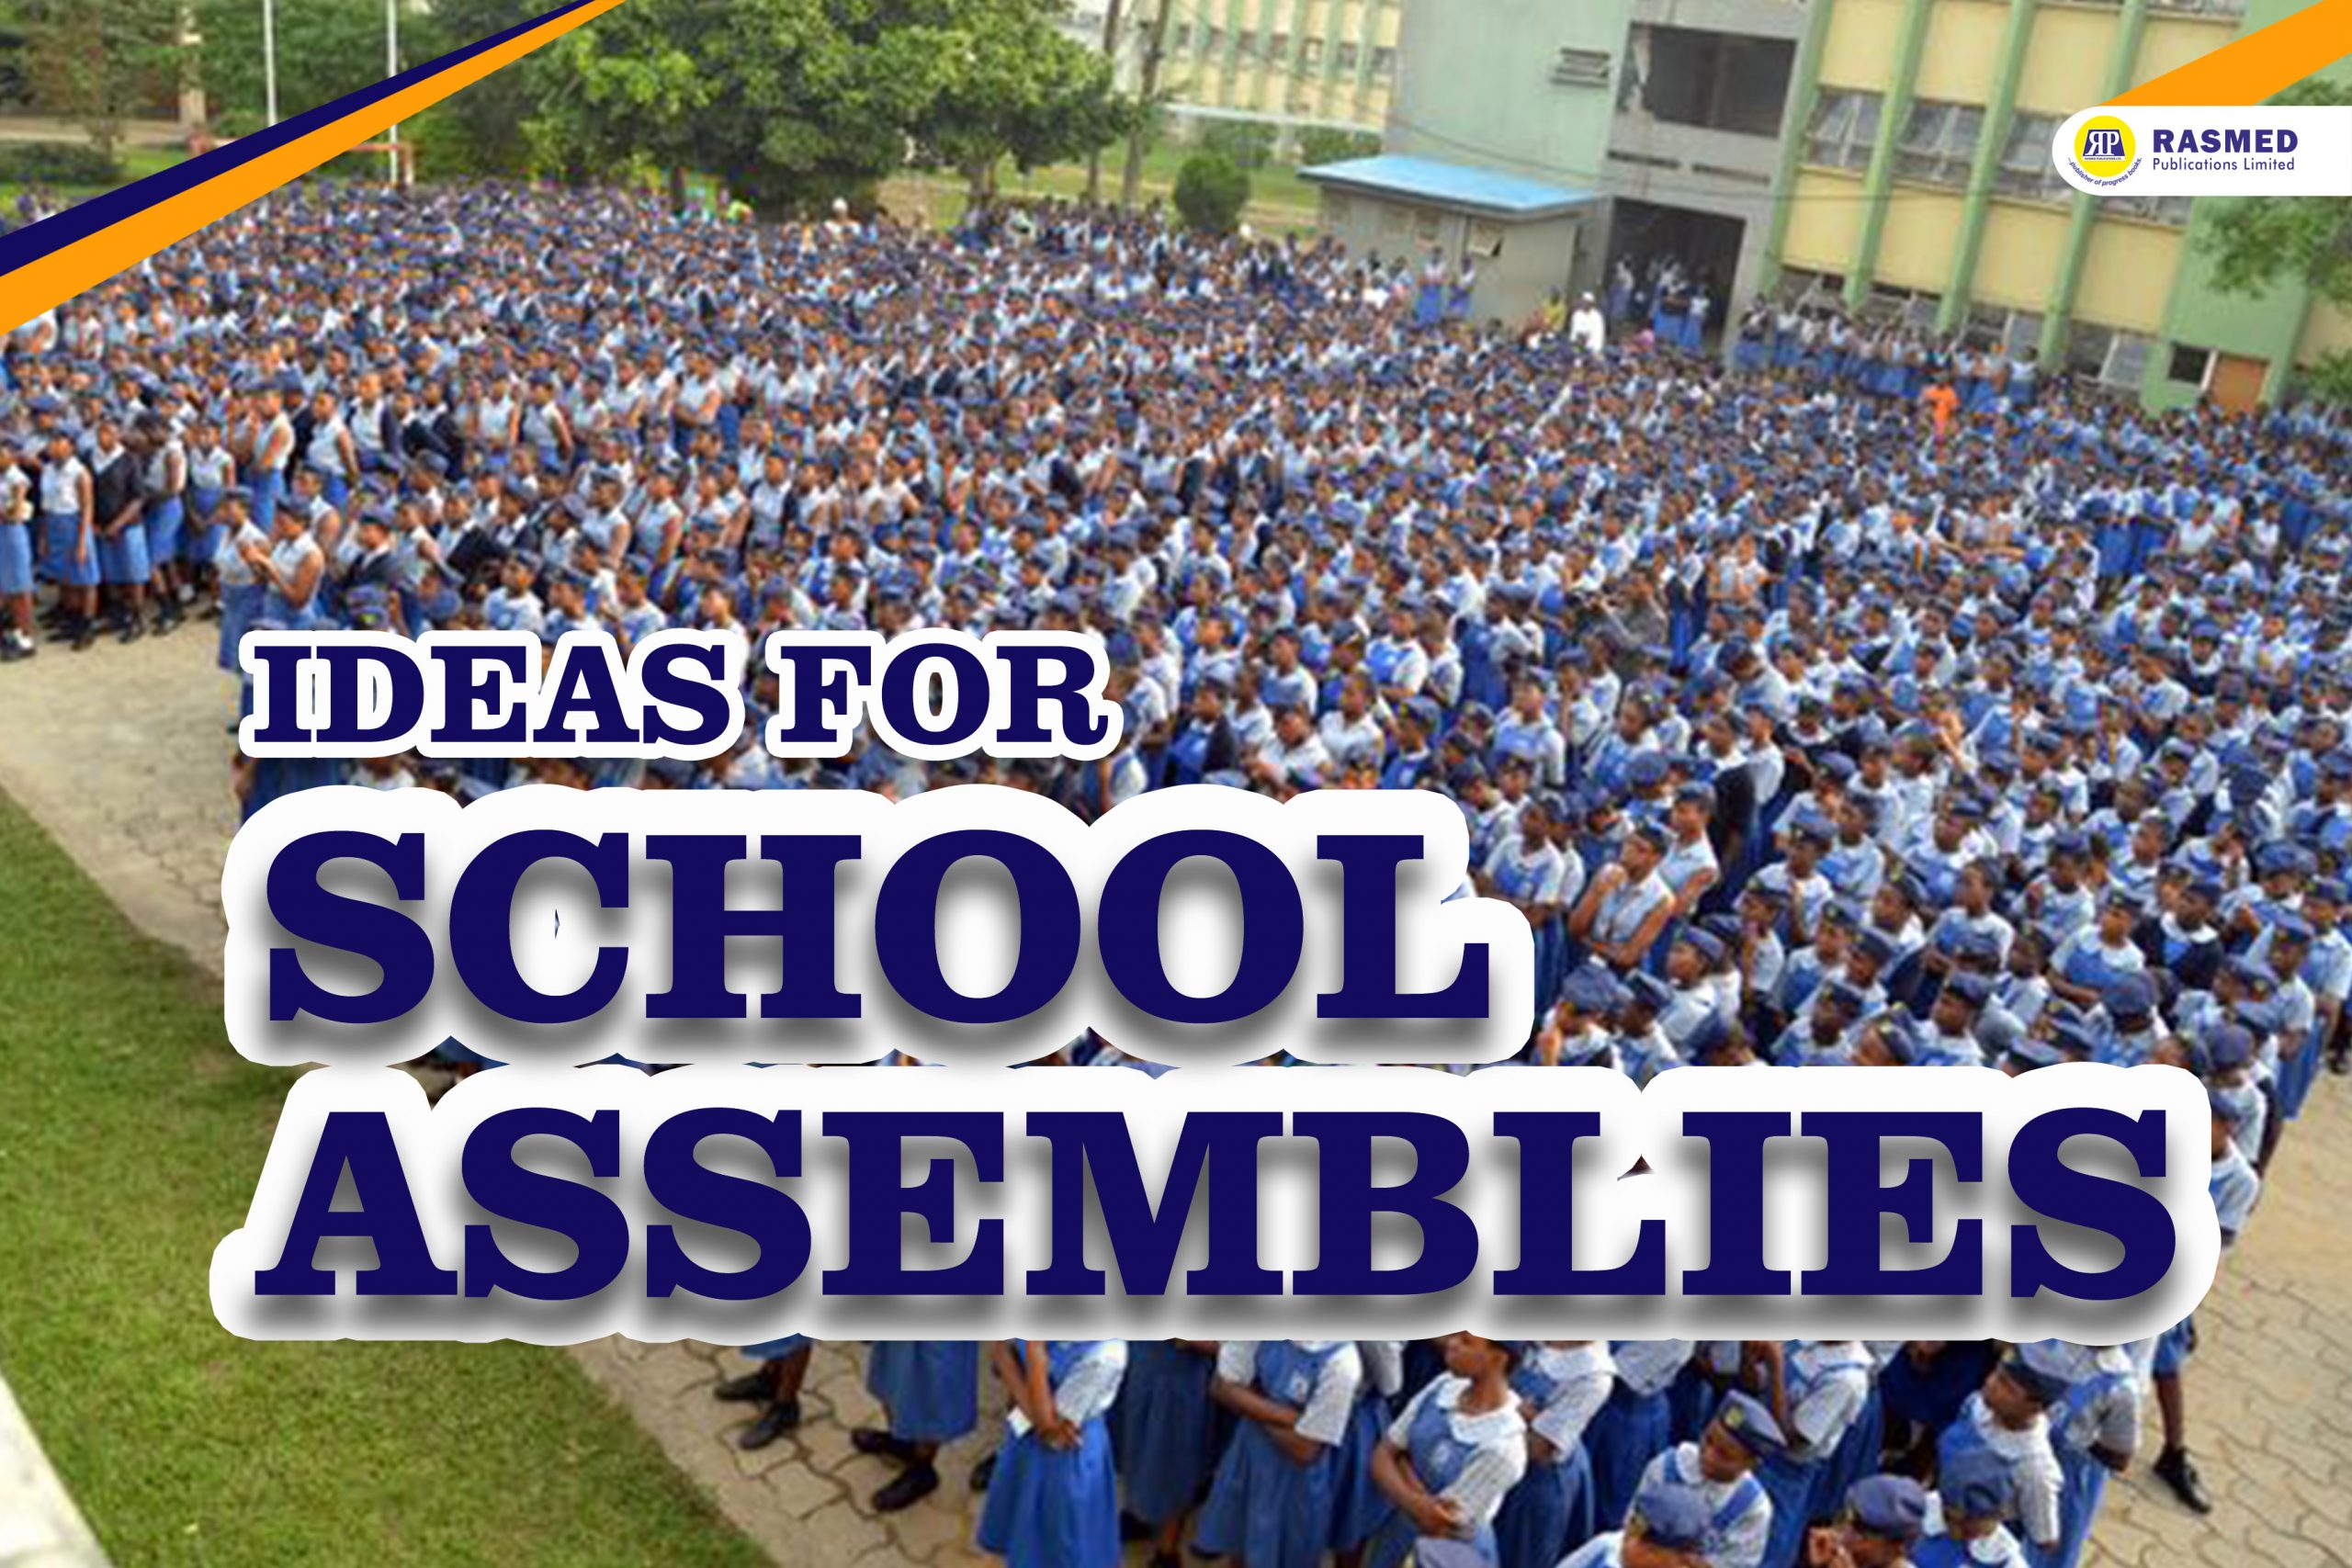 School assembly